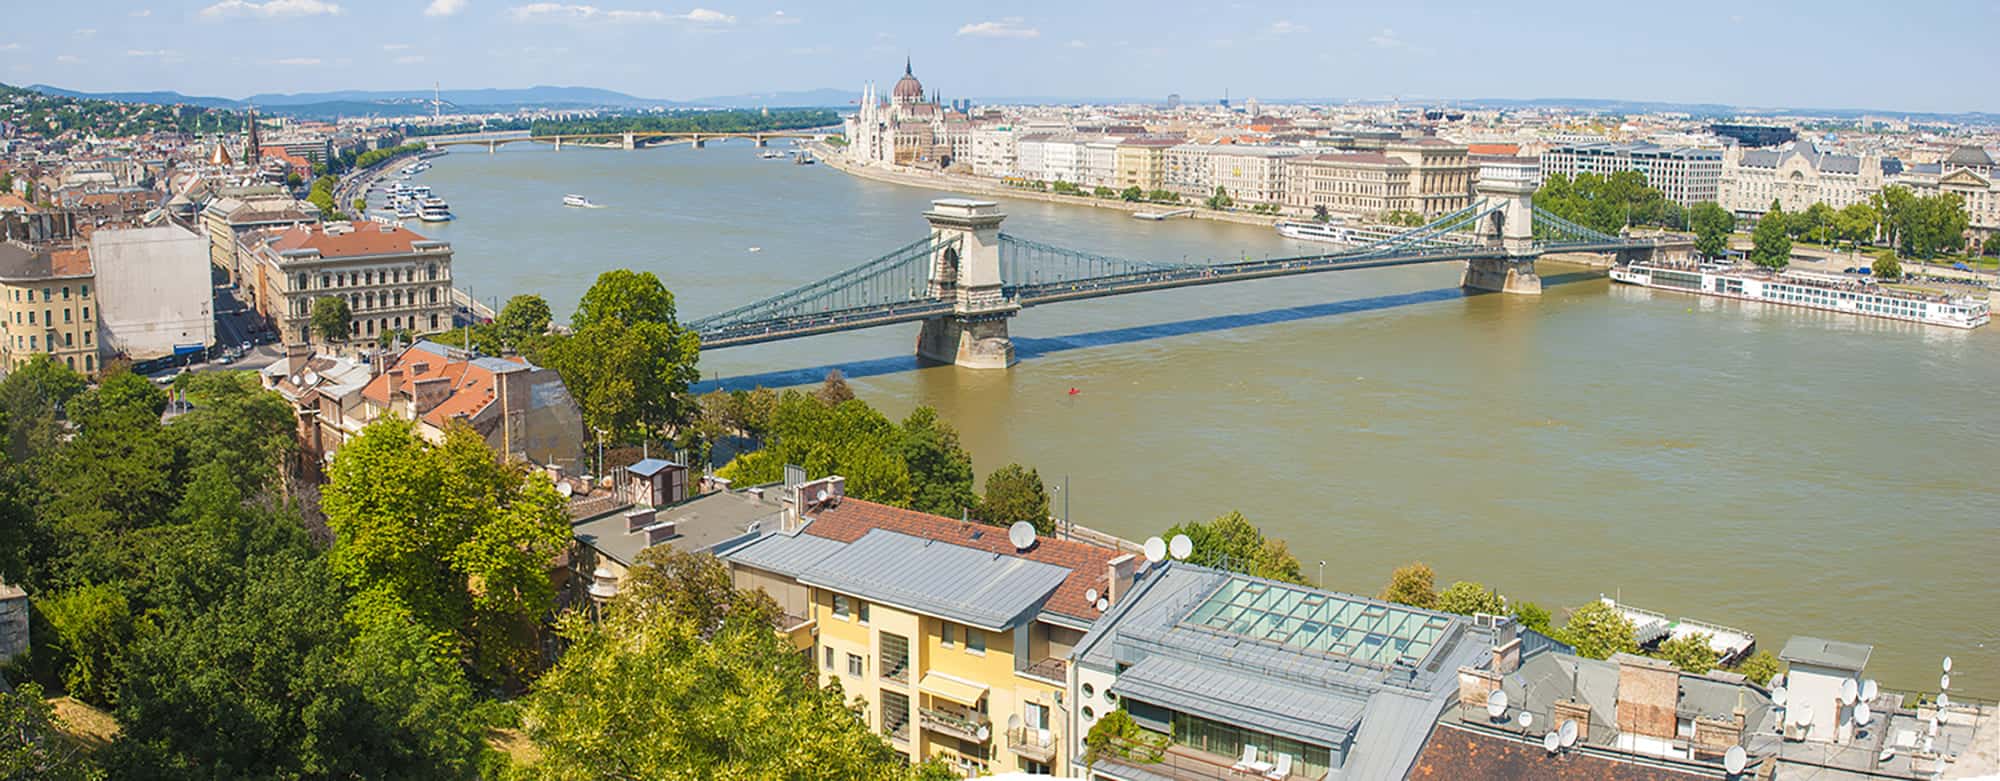 budapest-panorama-min.jpg